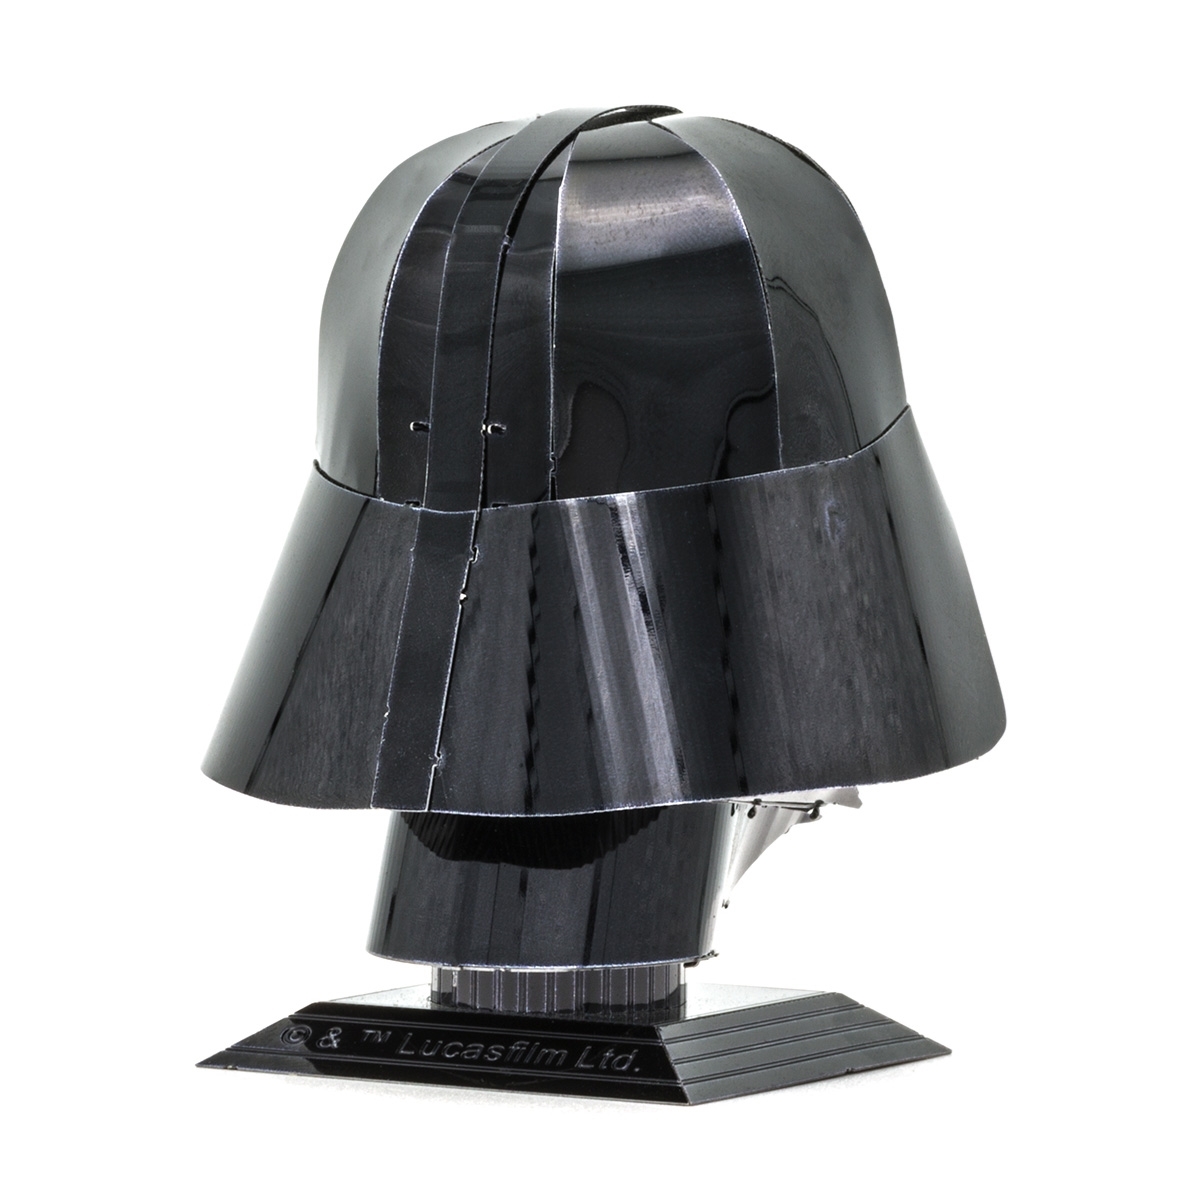 Fascinations Metal Earth Star Wars Darth Vader Helmet 3d Model Kit MMS314 for sale online 